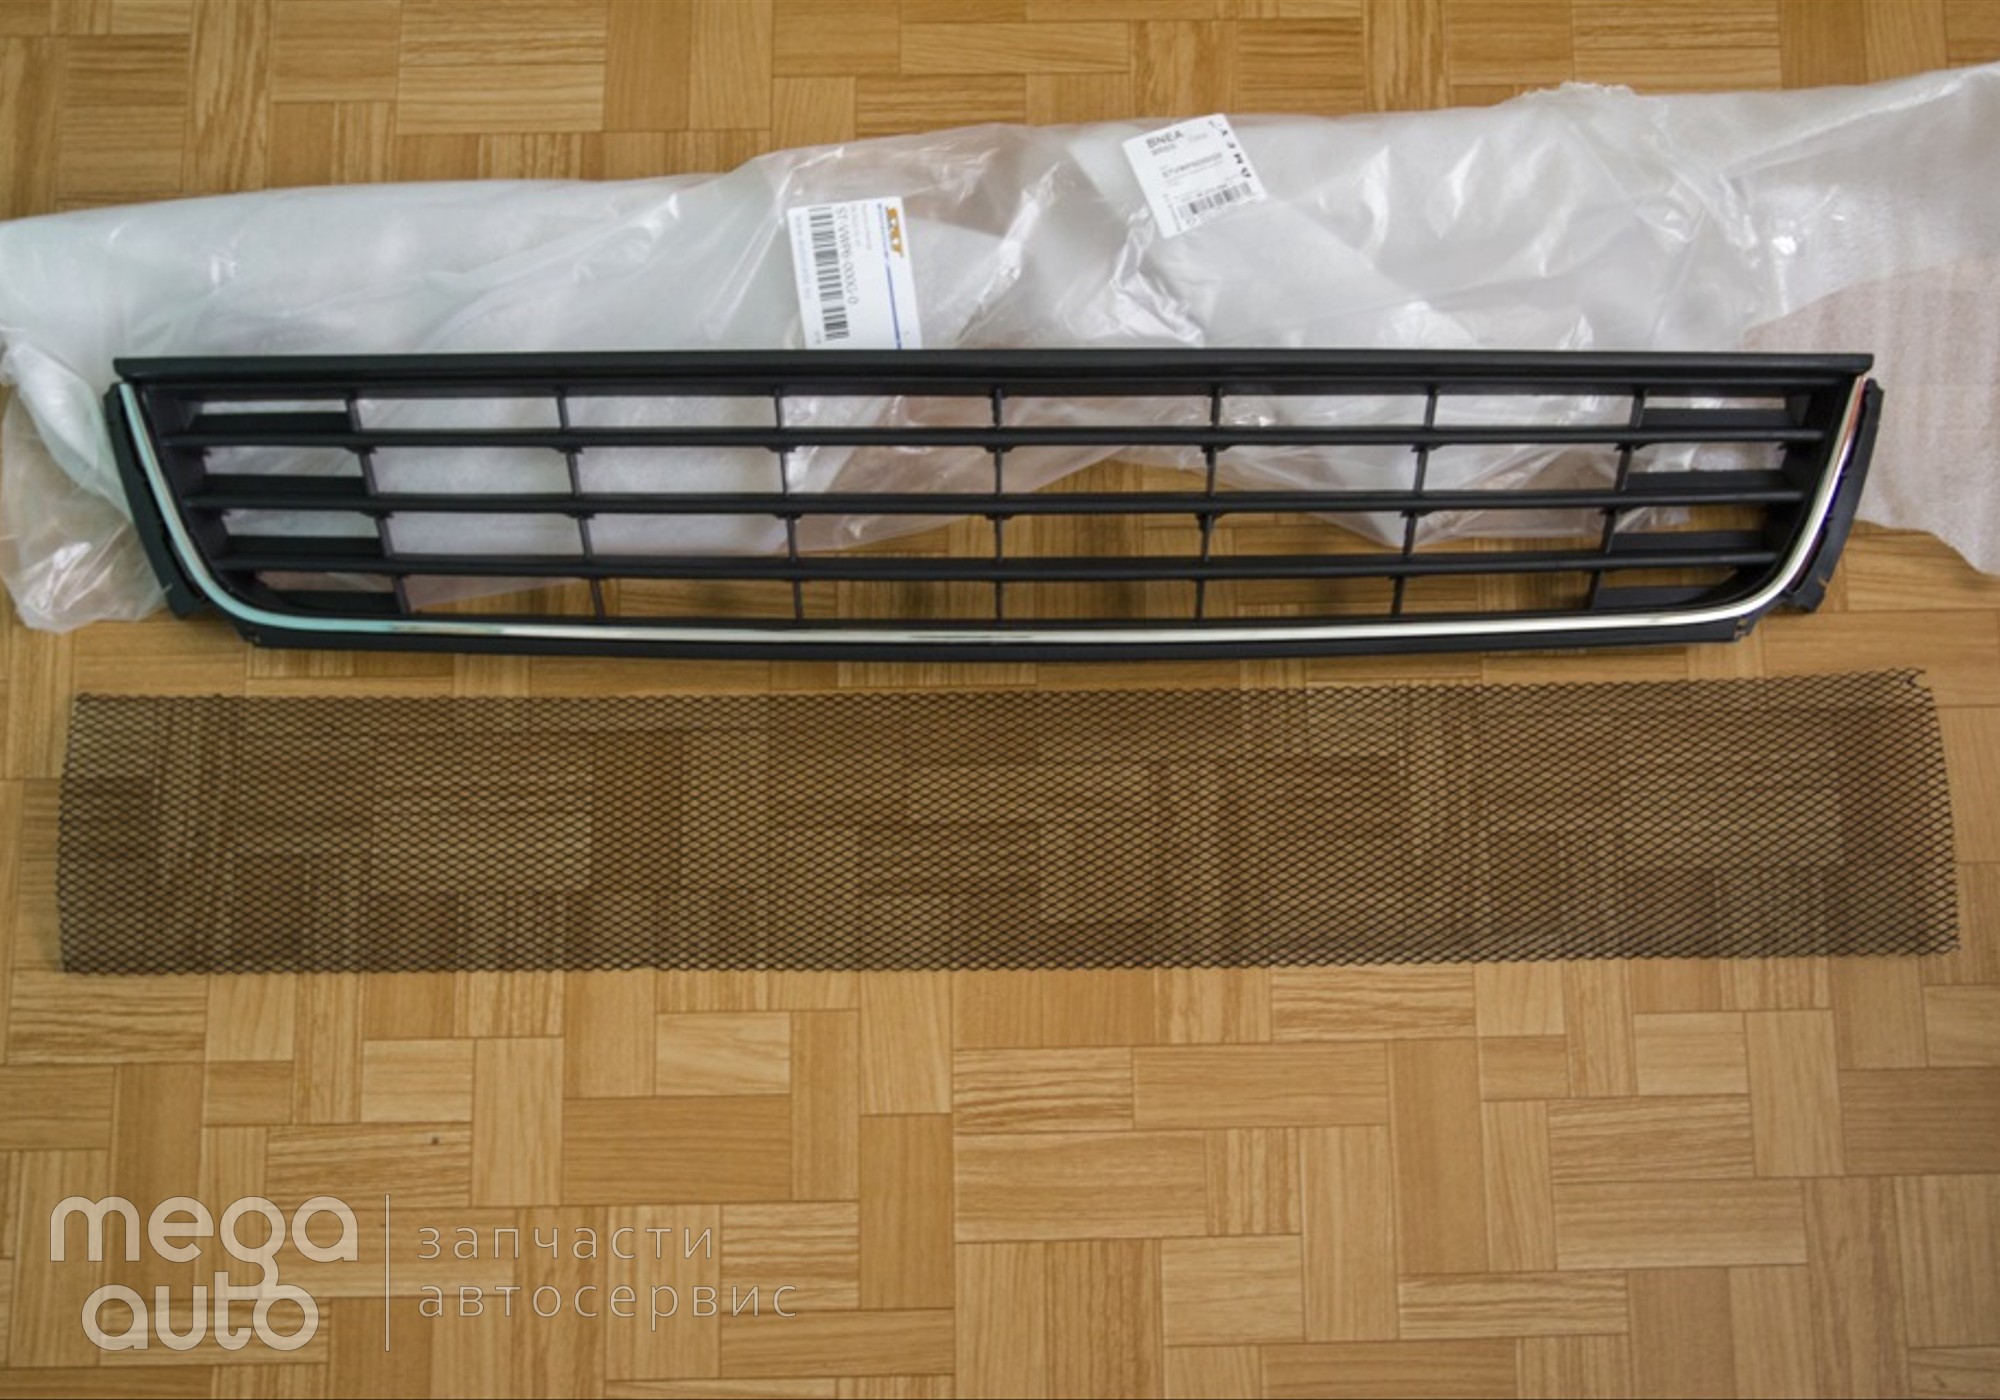 6RU8536779B9 Решетка в бампер фольц ваген поло 5 11-15 г(Sat) для Volkswagen Polo V (с 2009 по 2020)